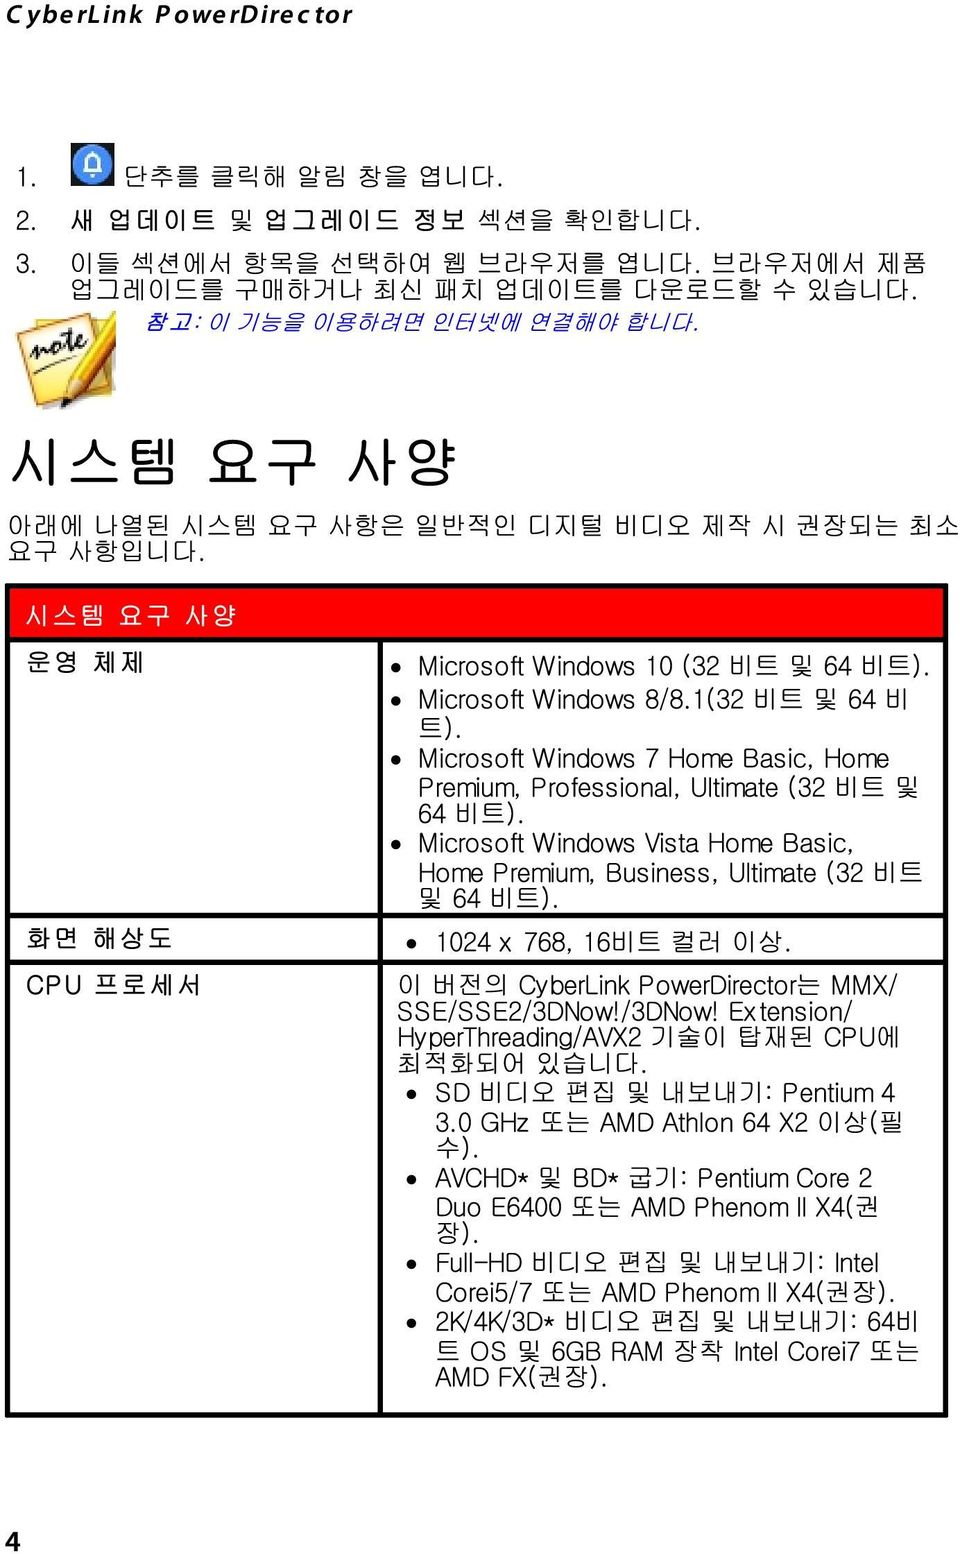 Microsoft Windows 7 Home Basic, Home Premium, 64 비트). Professional, Ultimate (32 비트 및 Microsoft Windows Vista Home Basic, Home Premium, Business, Ultimate (32 비트 및 64 비트). 1024 x 768, 16비트 컬러 상.